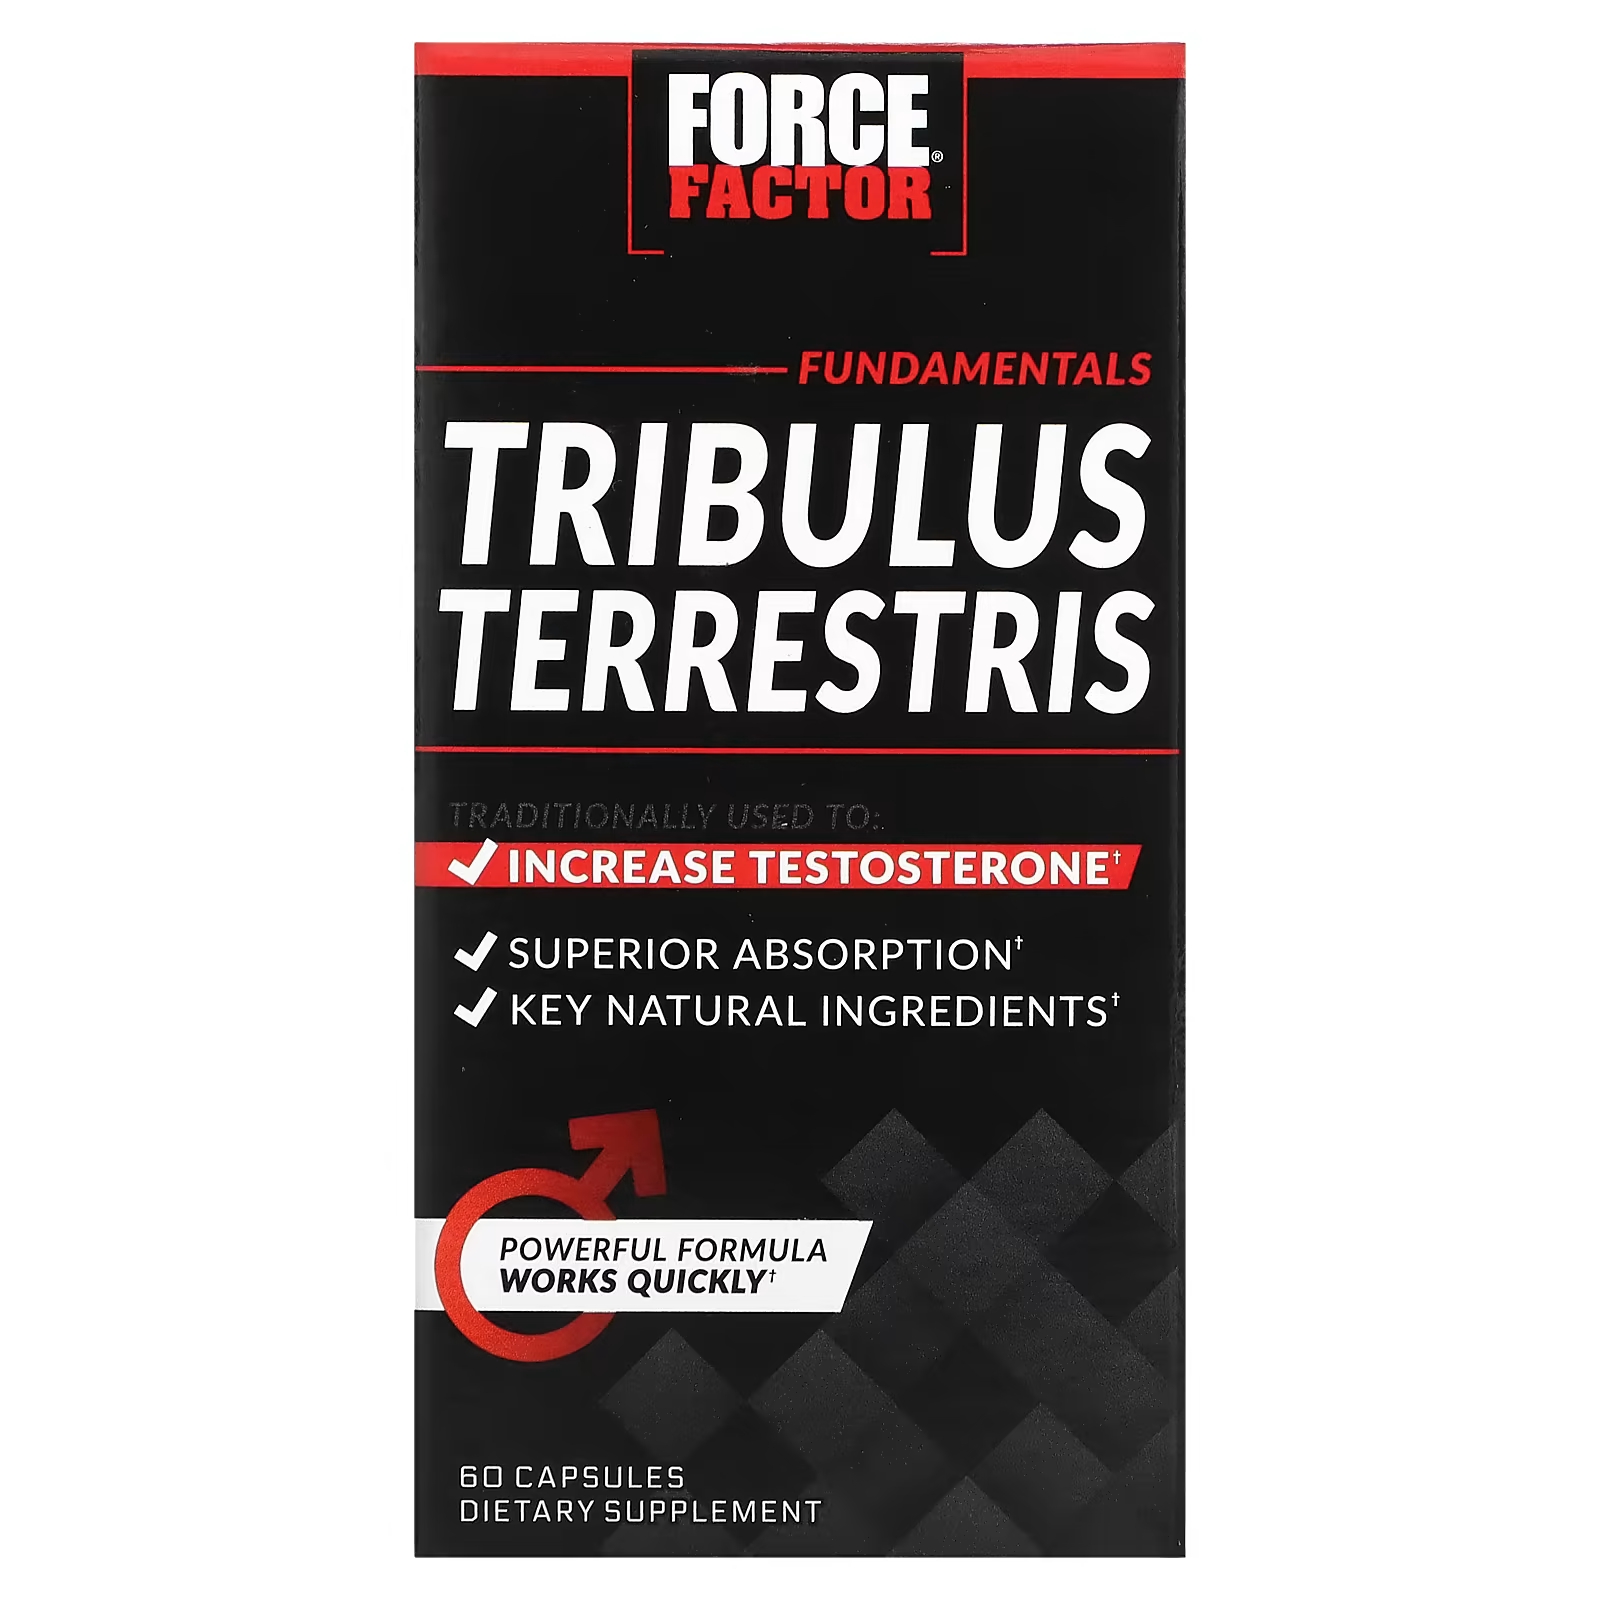 Force Factor Force Factor Tribulus Terrestris Бустер тестостерона, 60 капсул force factor черная мака 60 капсул